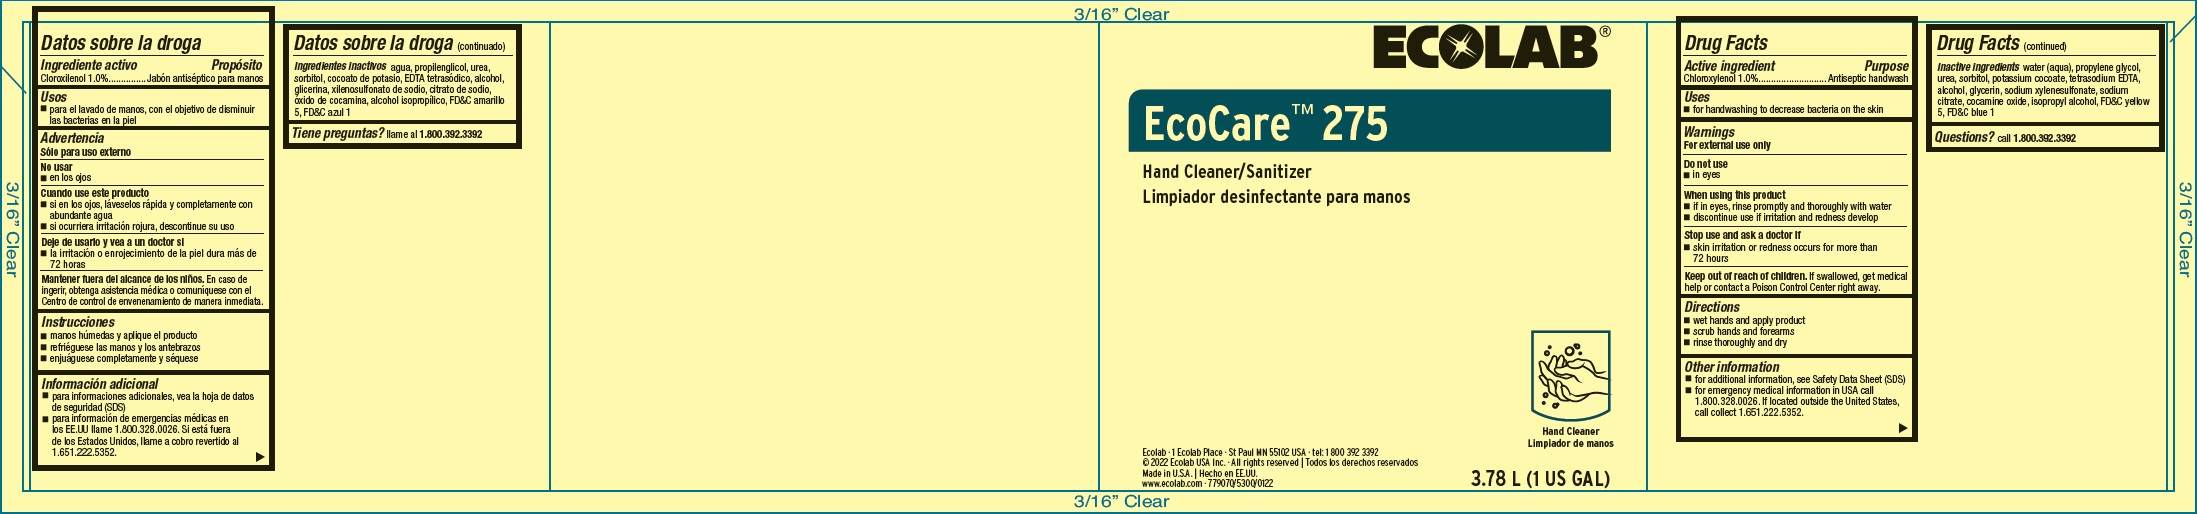 Ecocare 275 | Chloroxylenol Solution Breastfeeding